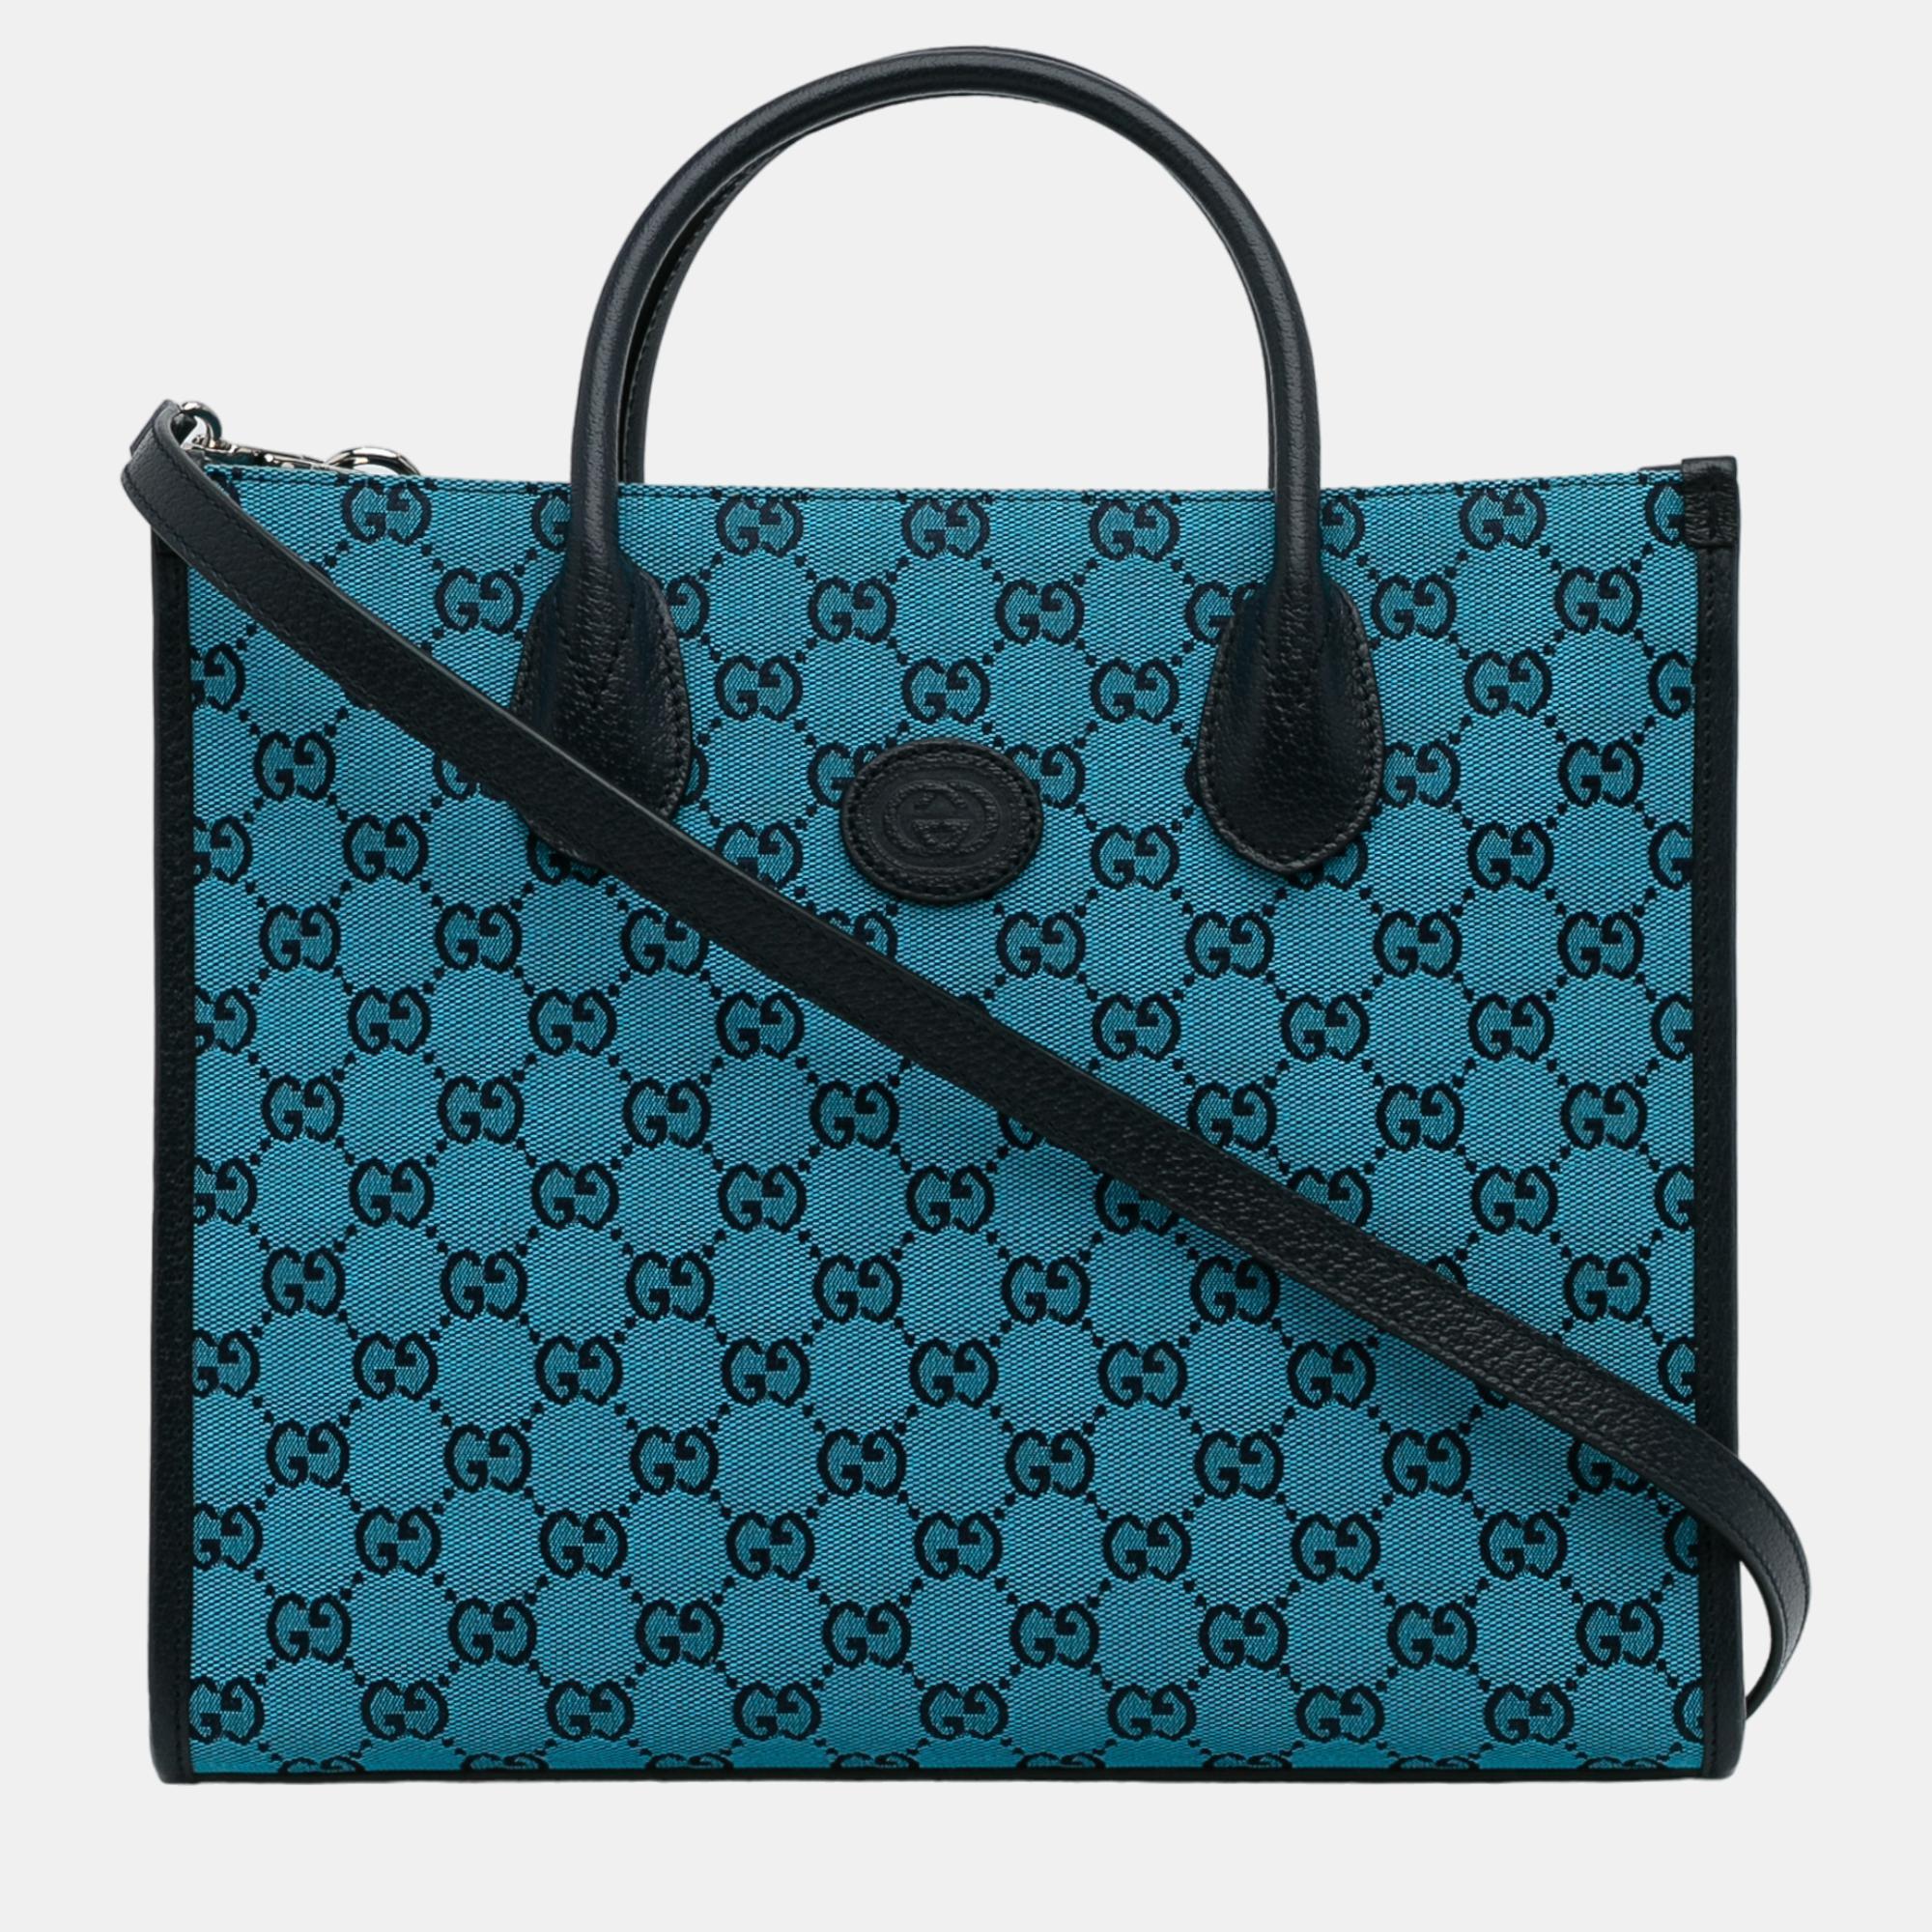 Gucci blue gg canvas satchel